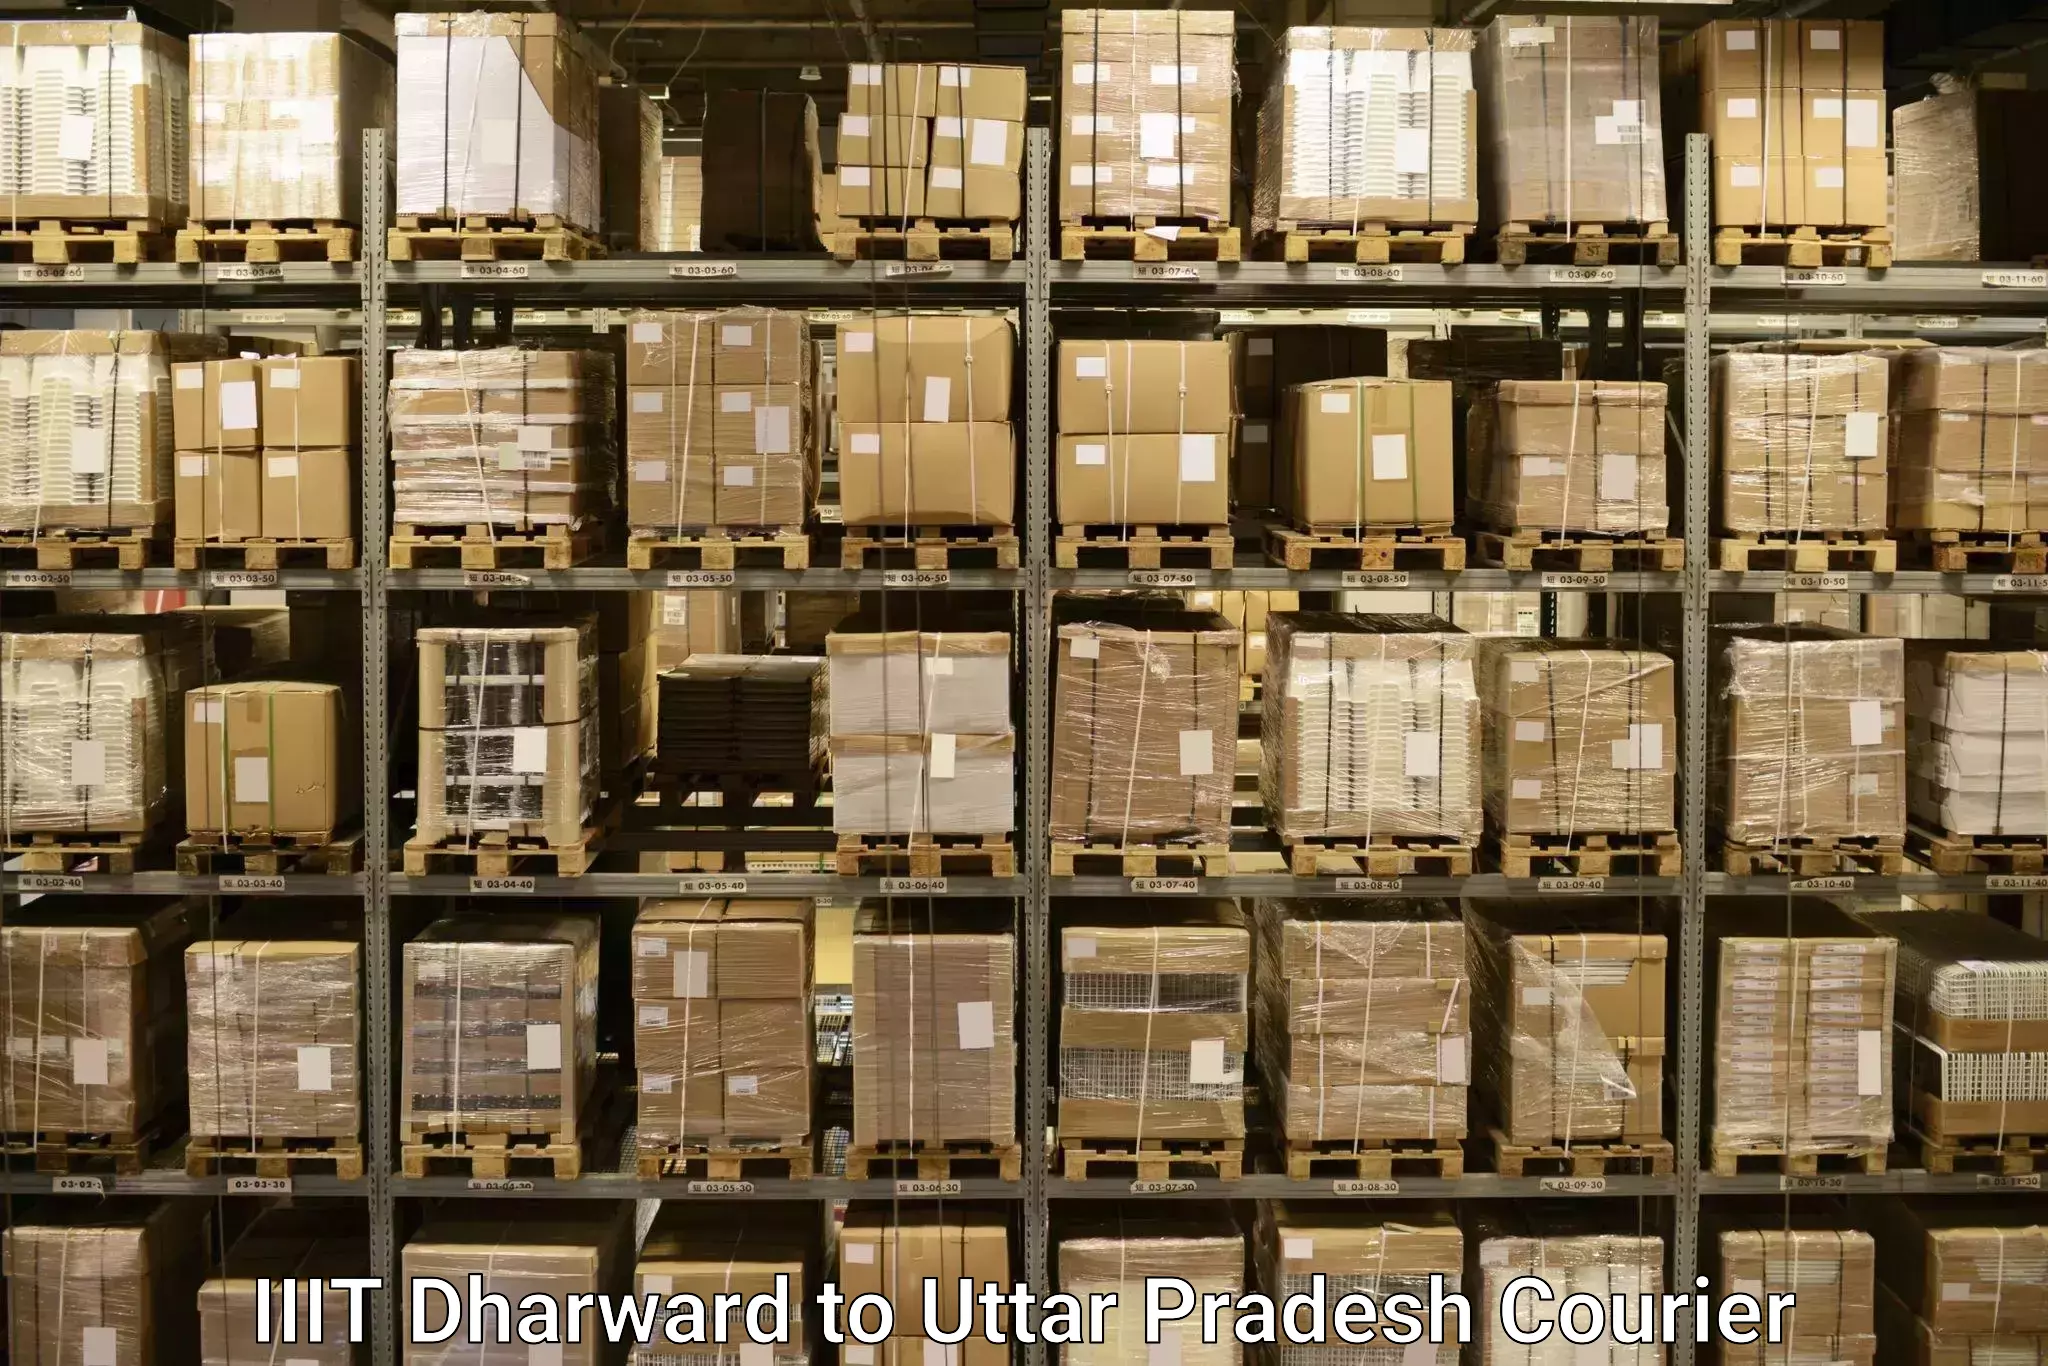 Baggage relocation service IIIT Dharward to Uttar Pradesh